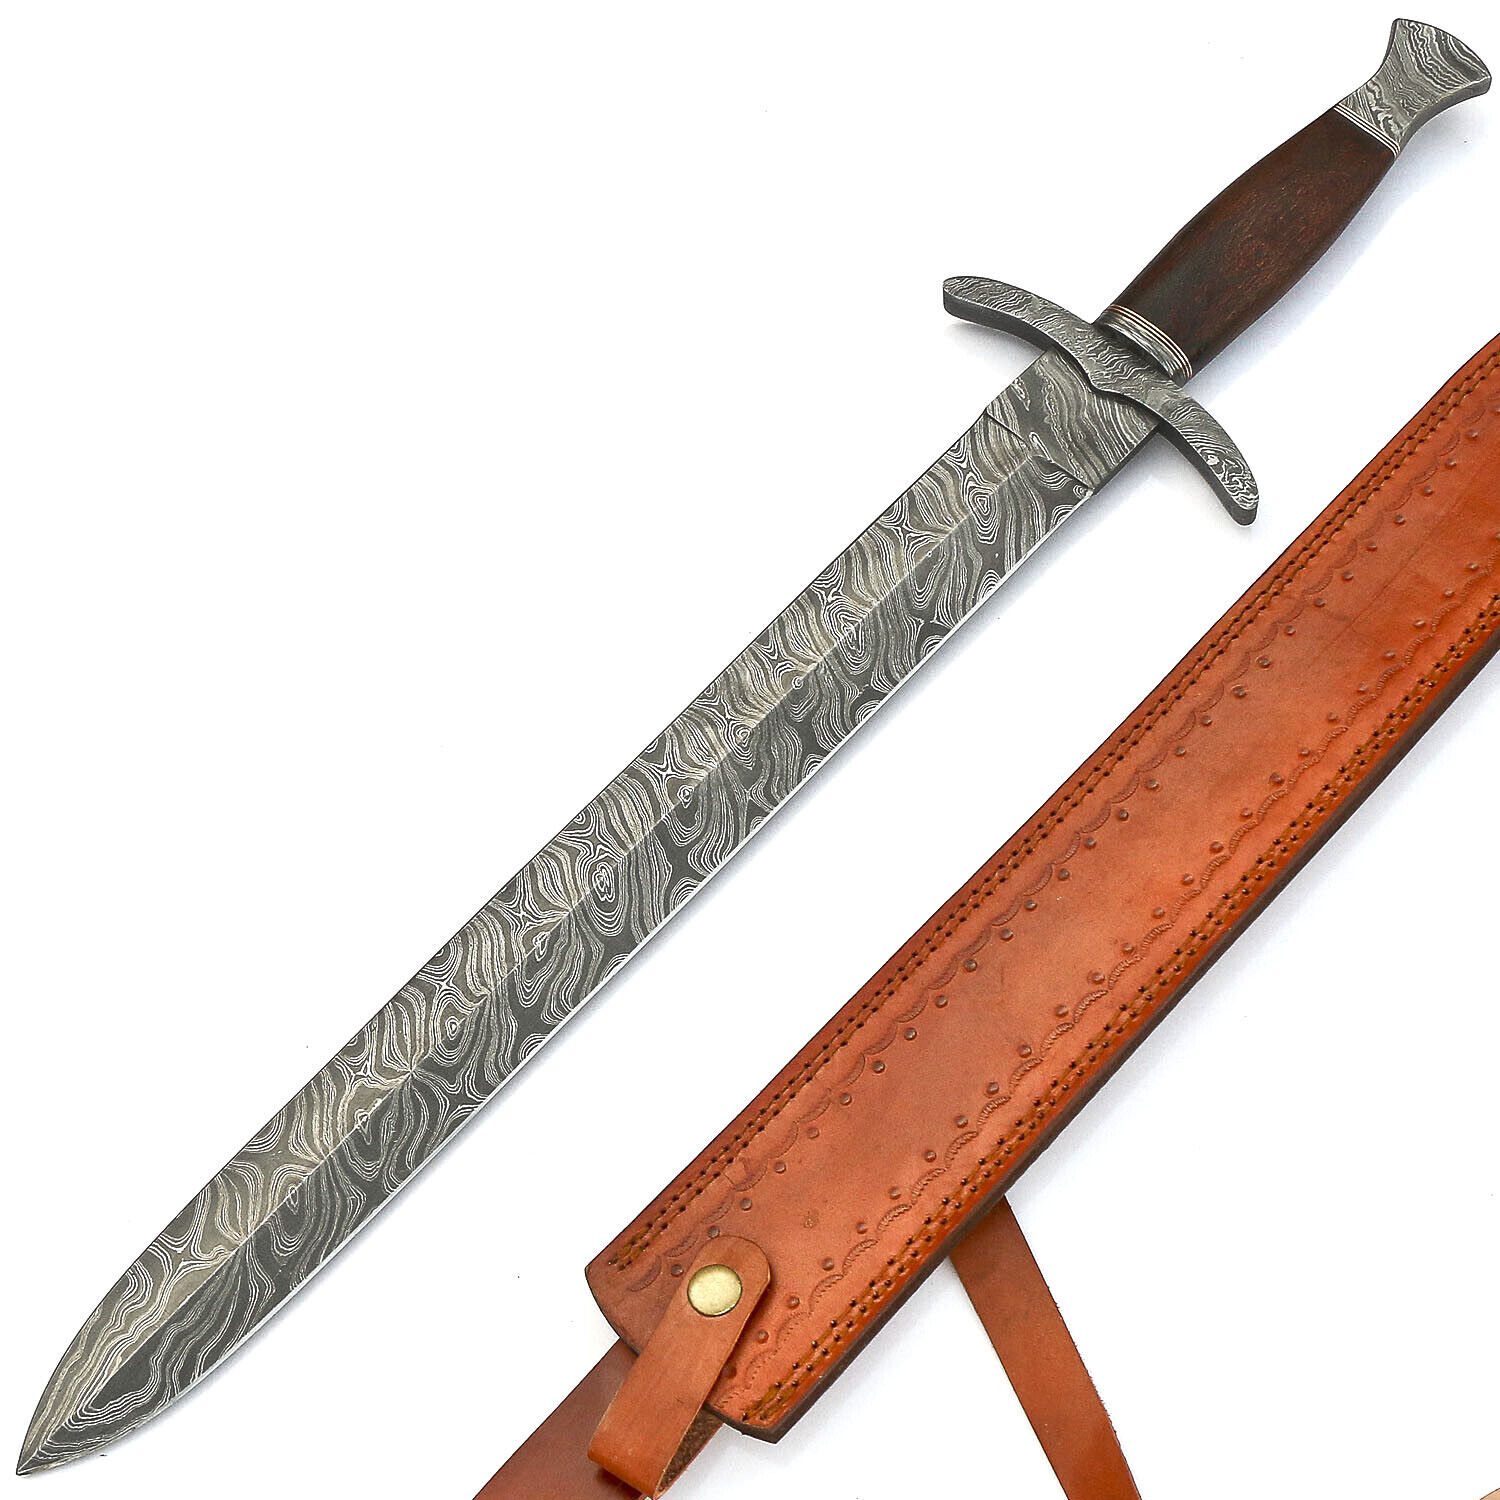 25'Inch Handmade Sword' Damascus Steel Full Tang Sword Hunting Sword With Sheath